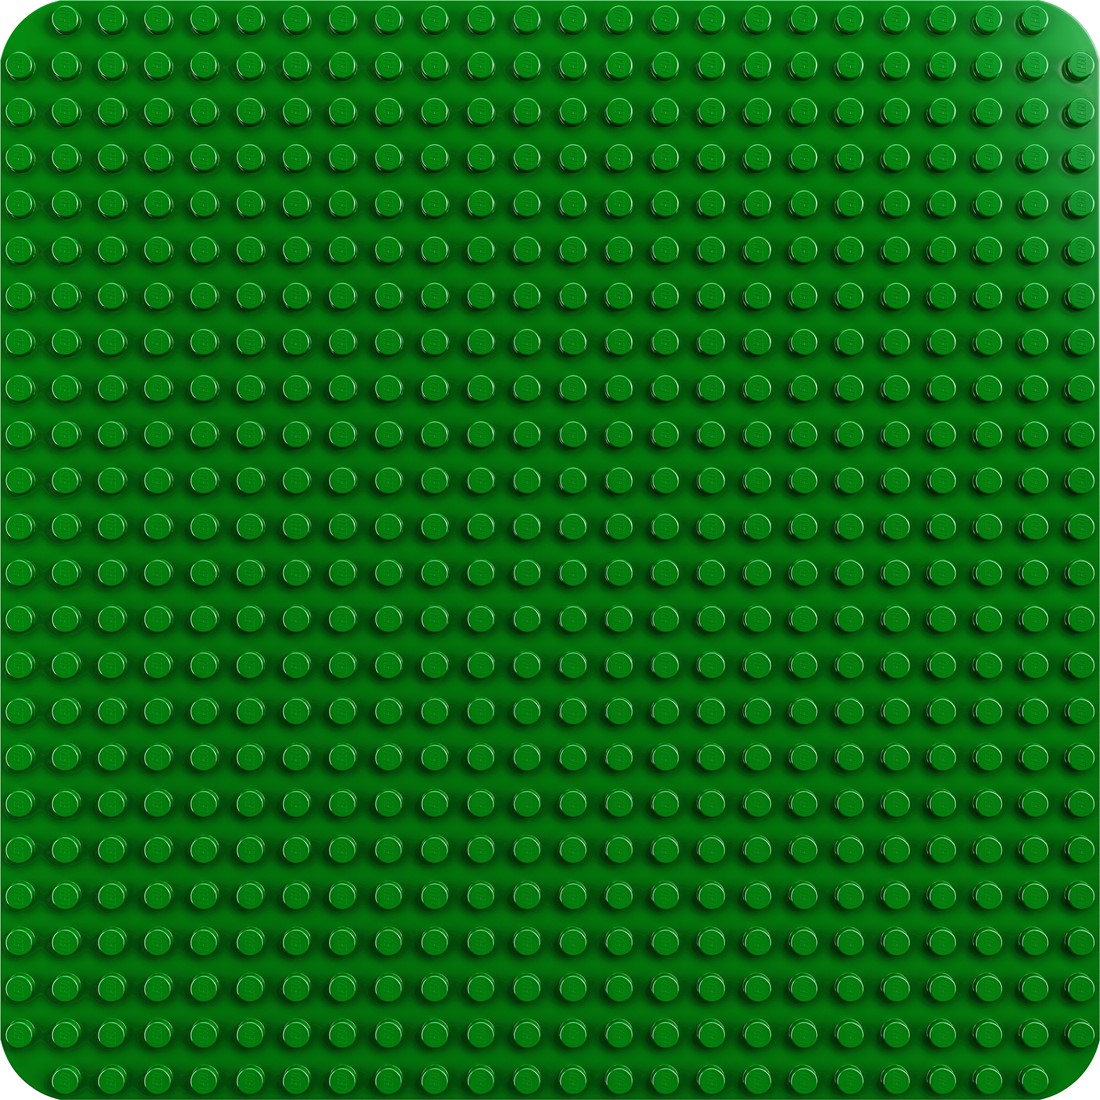 https://www.planethappy.be/resize/93287075_7409186547.jpg/0/1100/True/lego-duplo-classic-planche-de-construction-duplo-green-10980-3.jpg